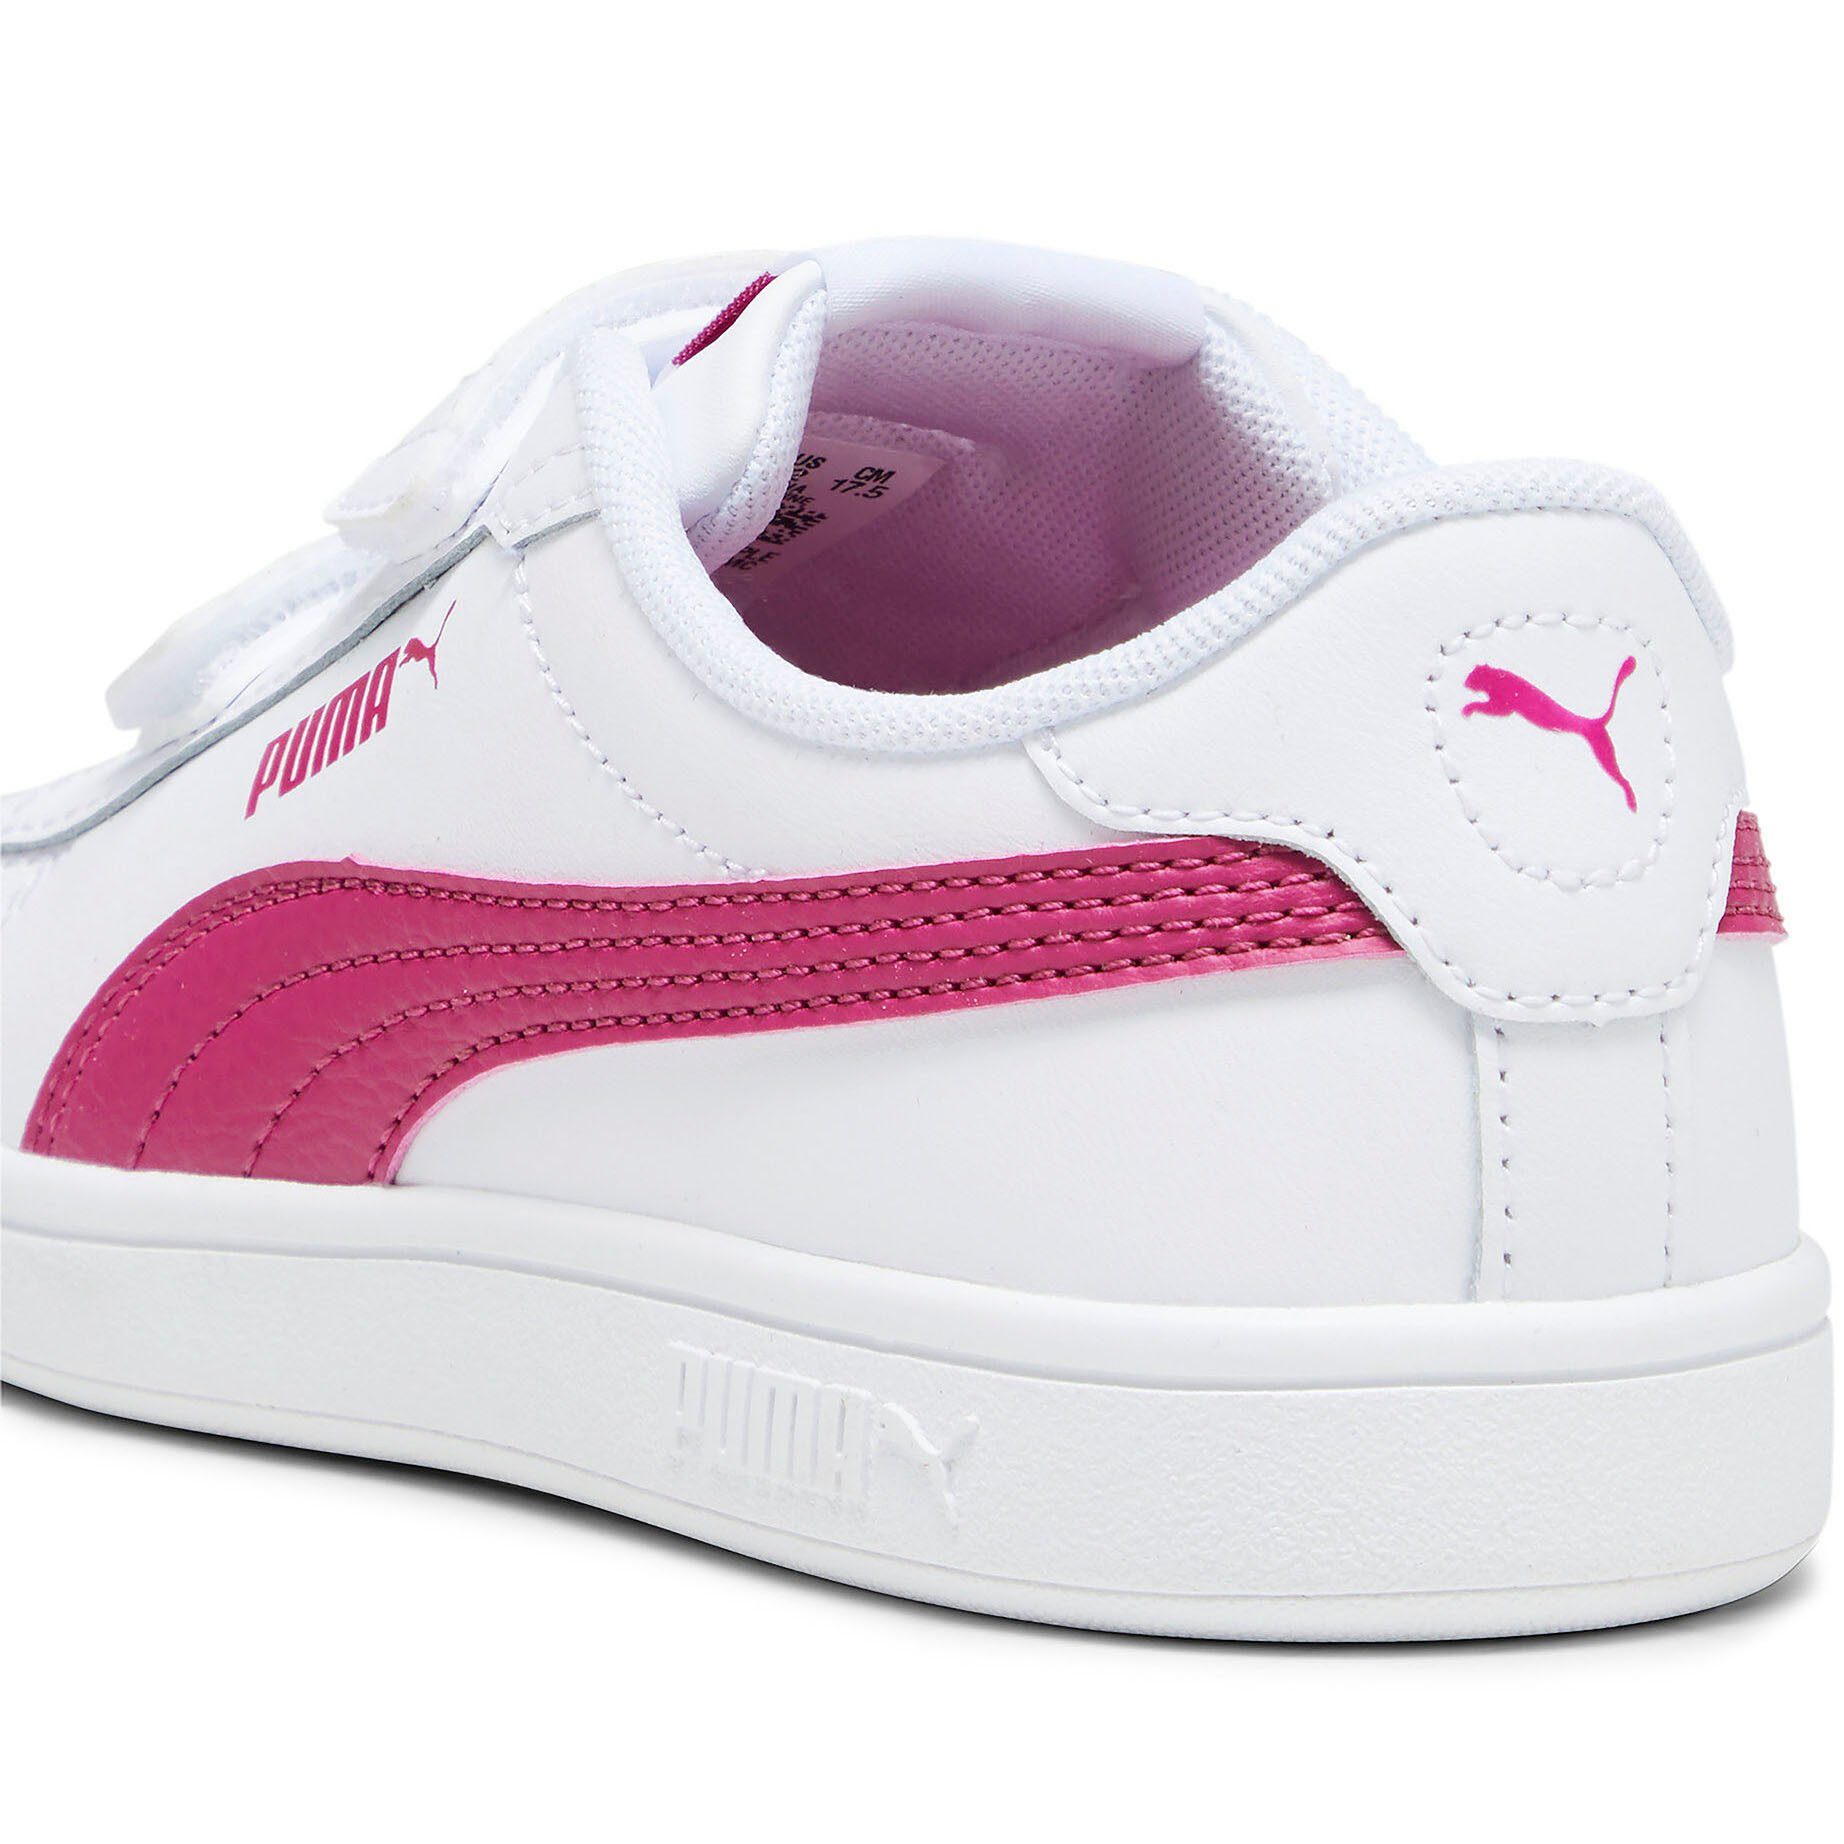 3.0 Sneaker Klettverschluss V PS mit PUMA White-Pinktastic PUMA SMASH L